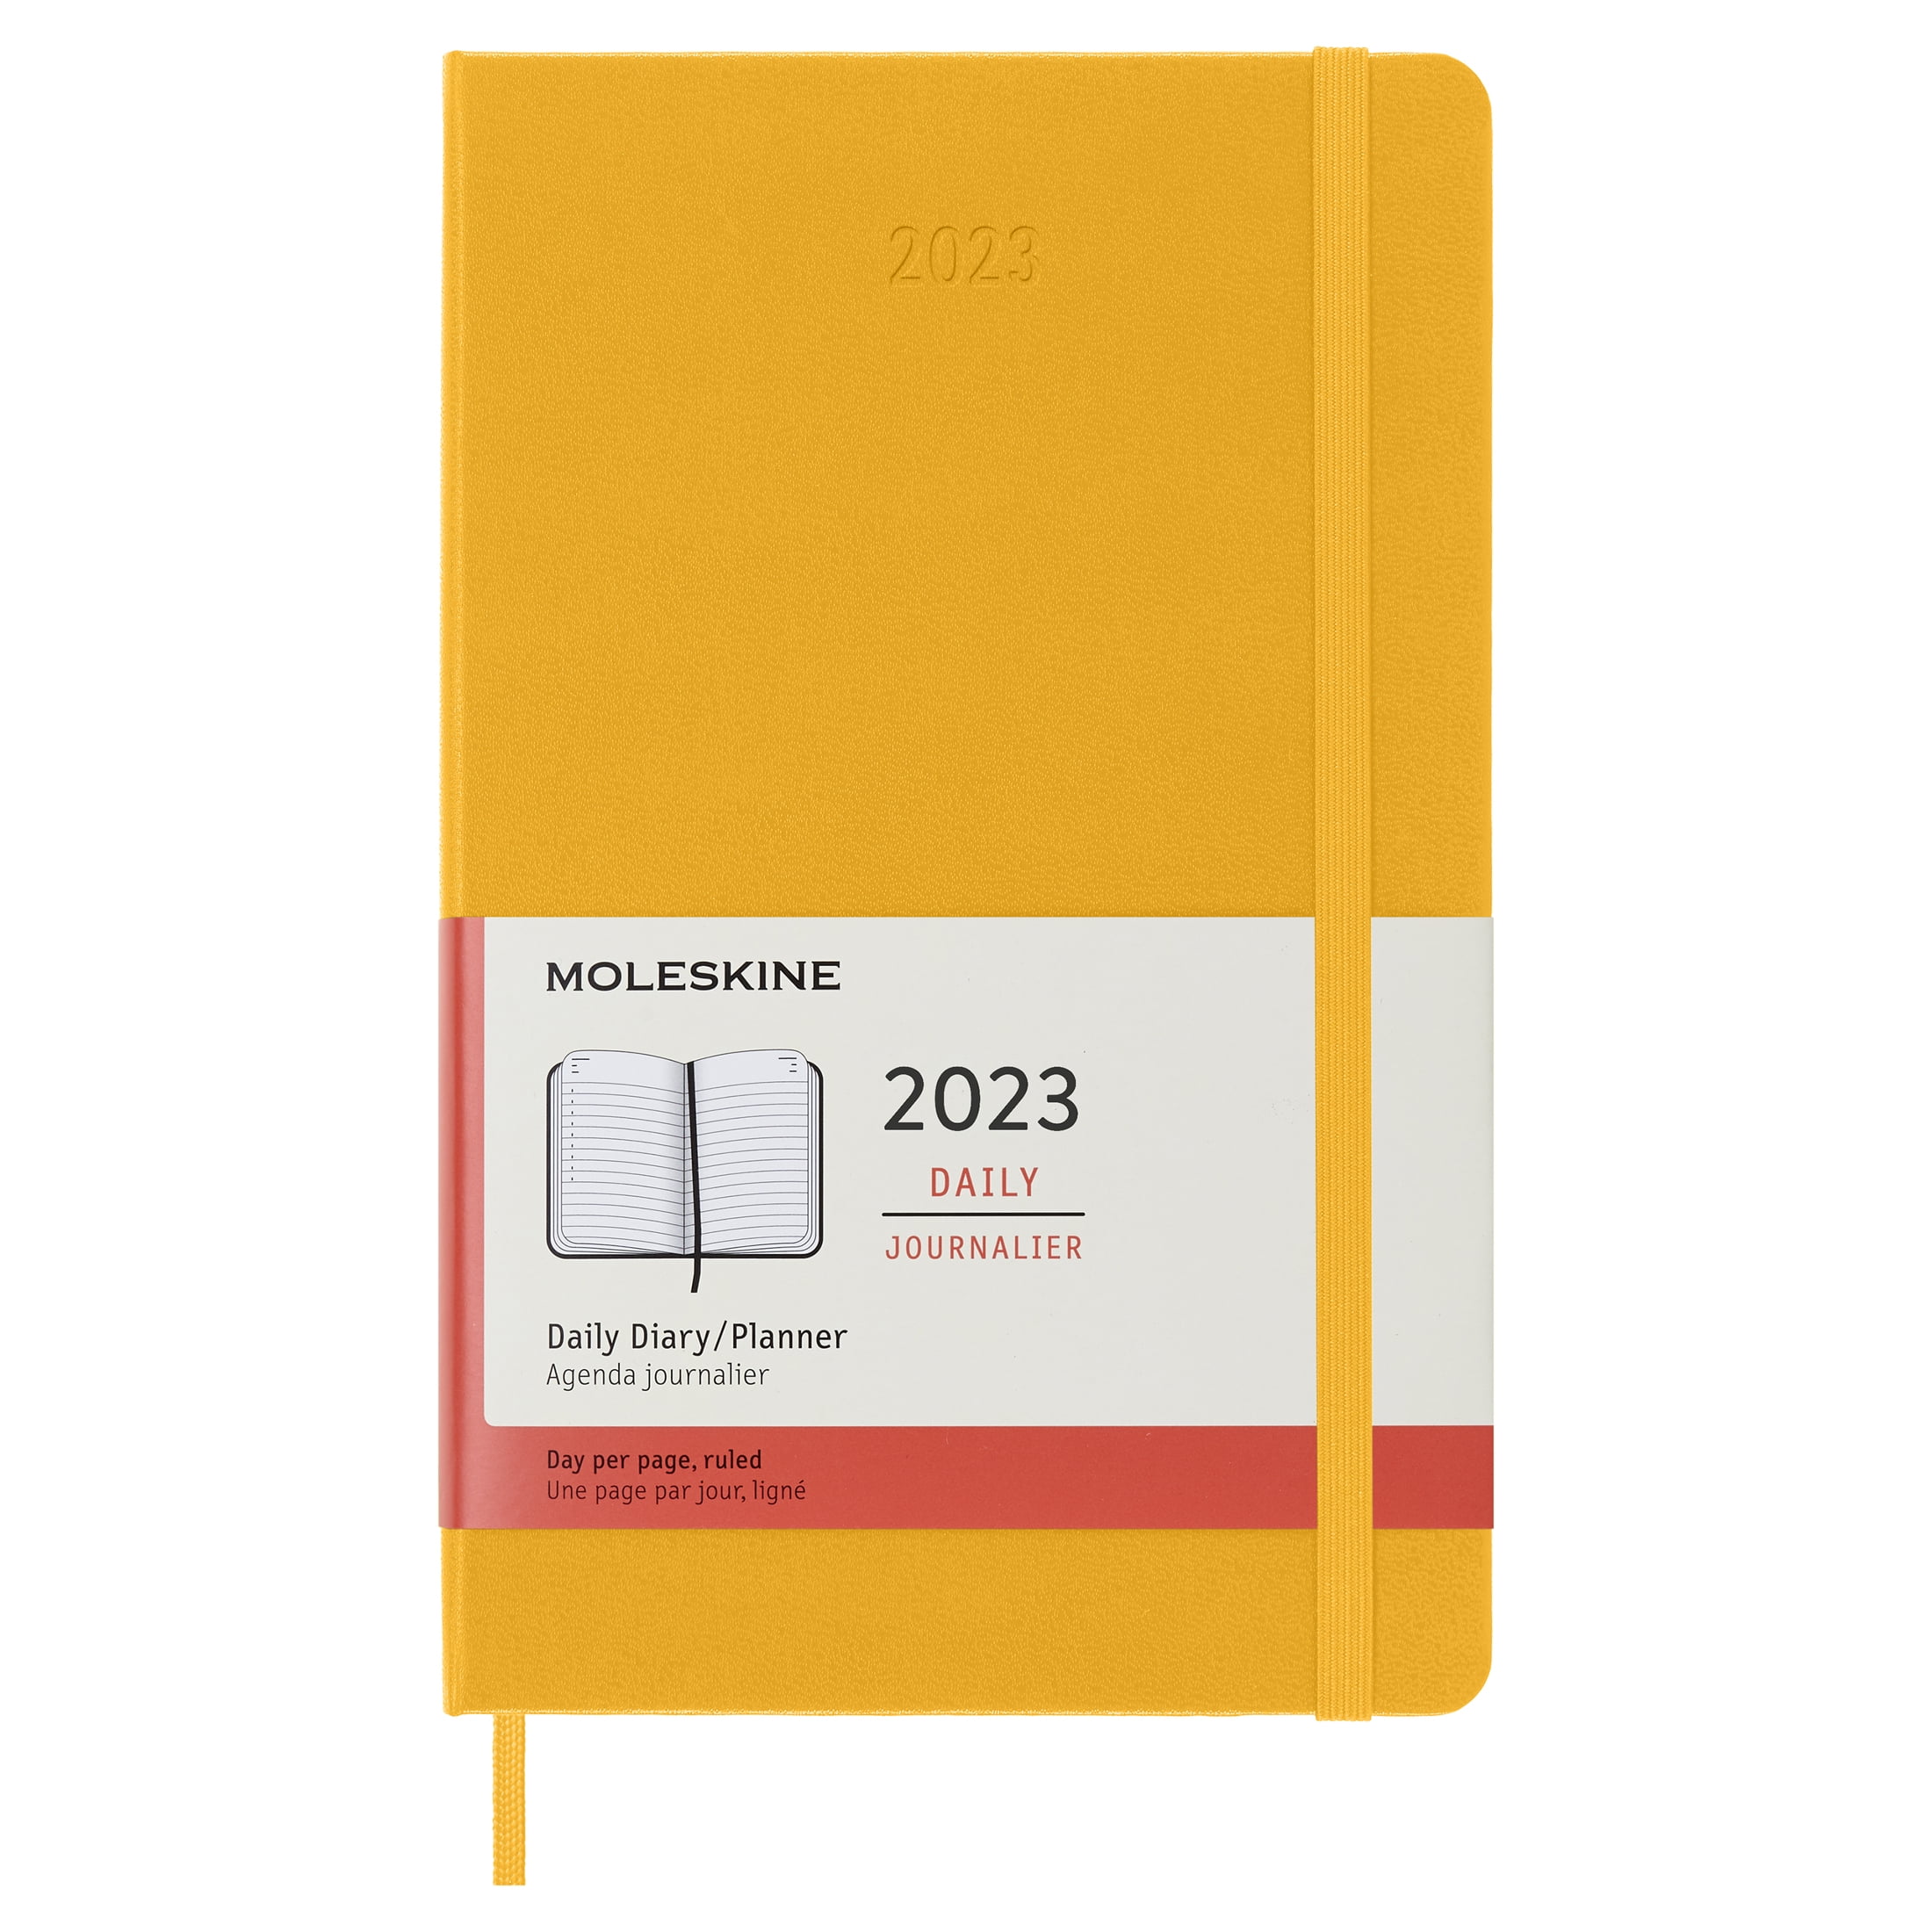 Moleskine 2023 Daily Planner, 12M, Large, Orange Yellow, Hard Cover (5 x  8.25) (Calendar)